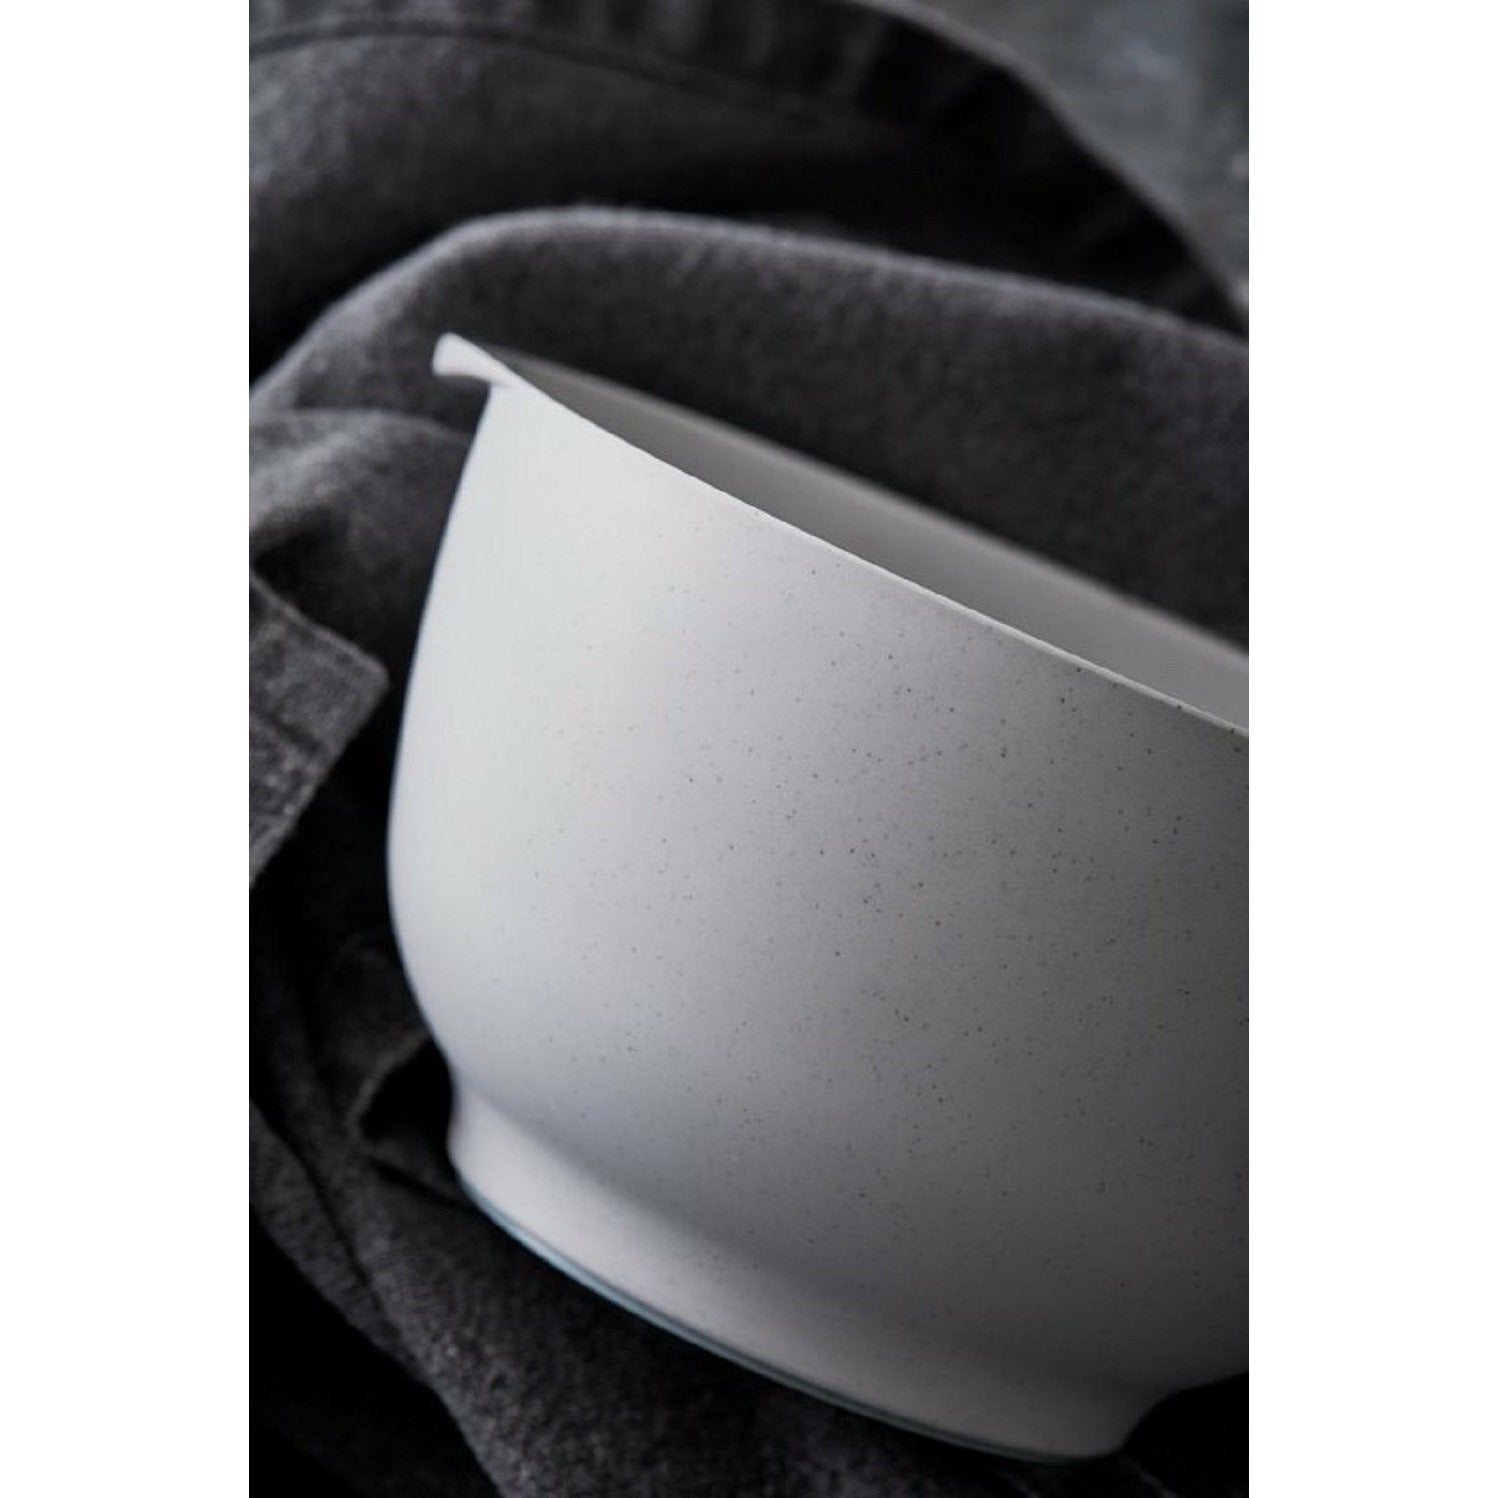 Rosti Margrethe Mixing Bowl Pebble White, 1,5 Liter